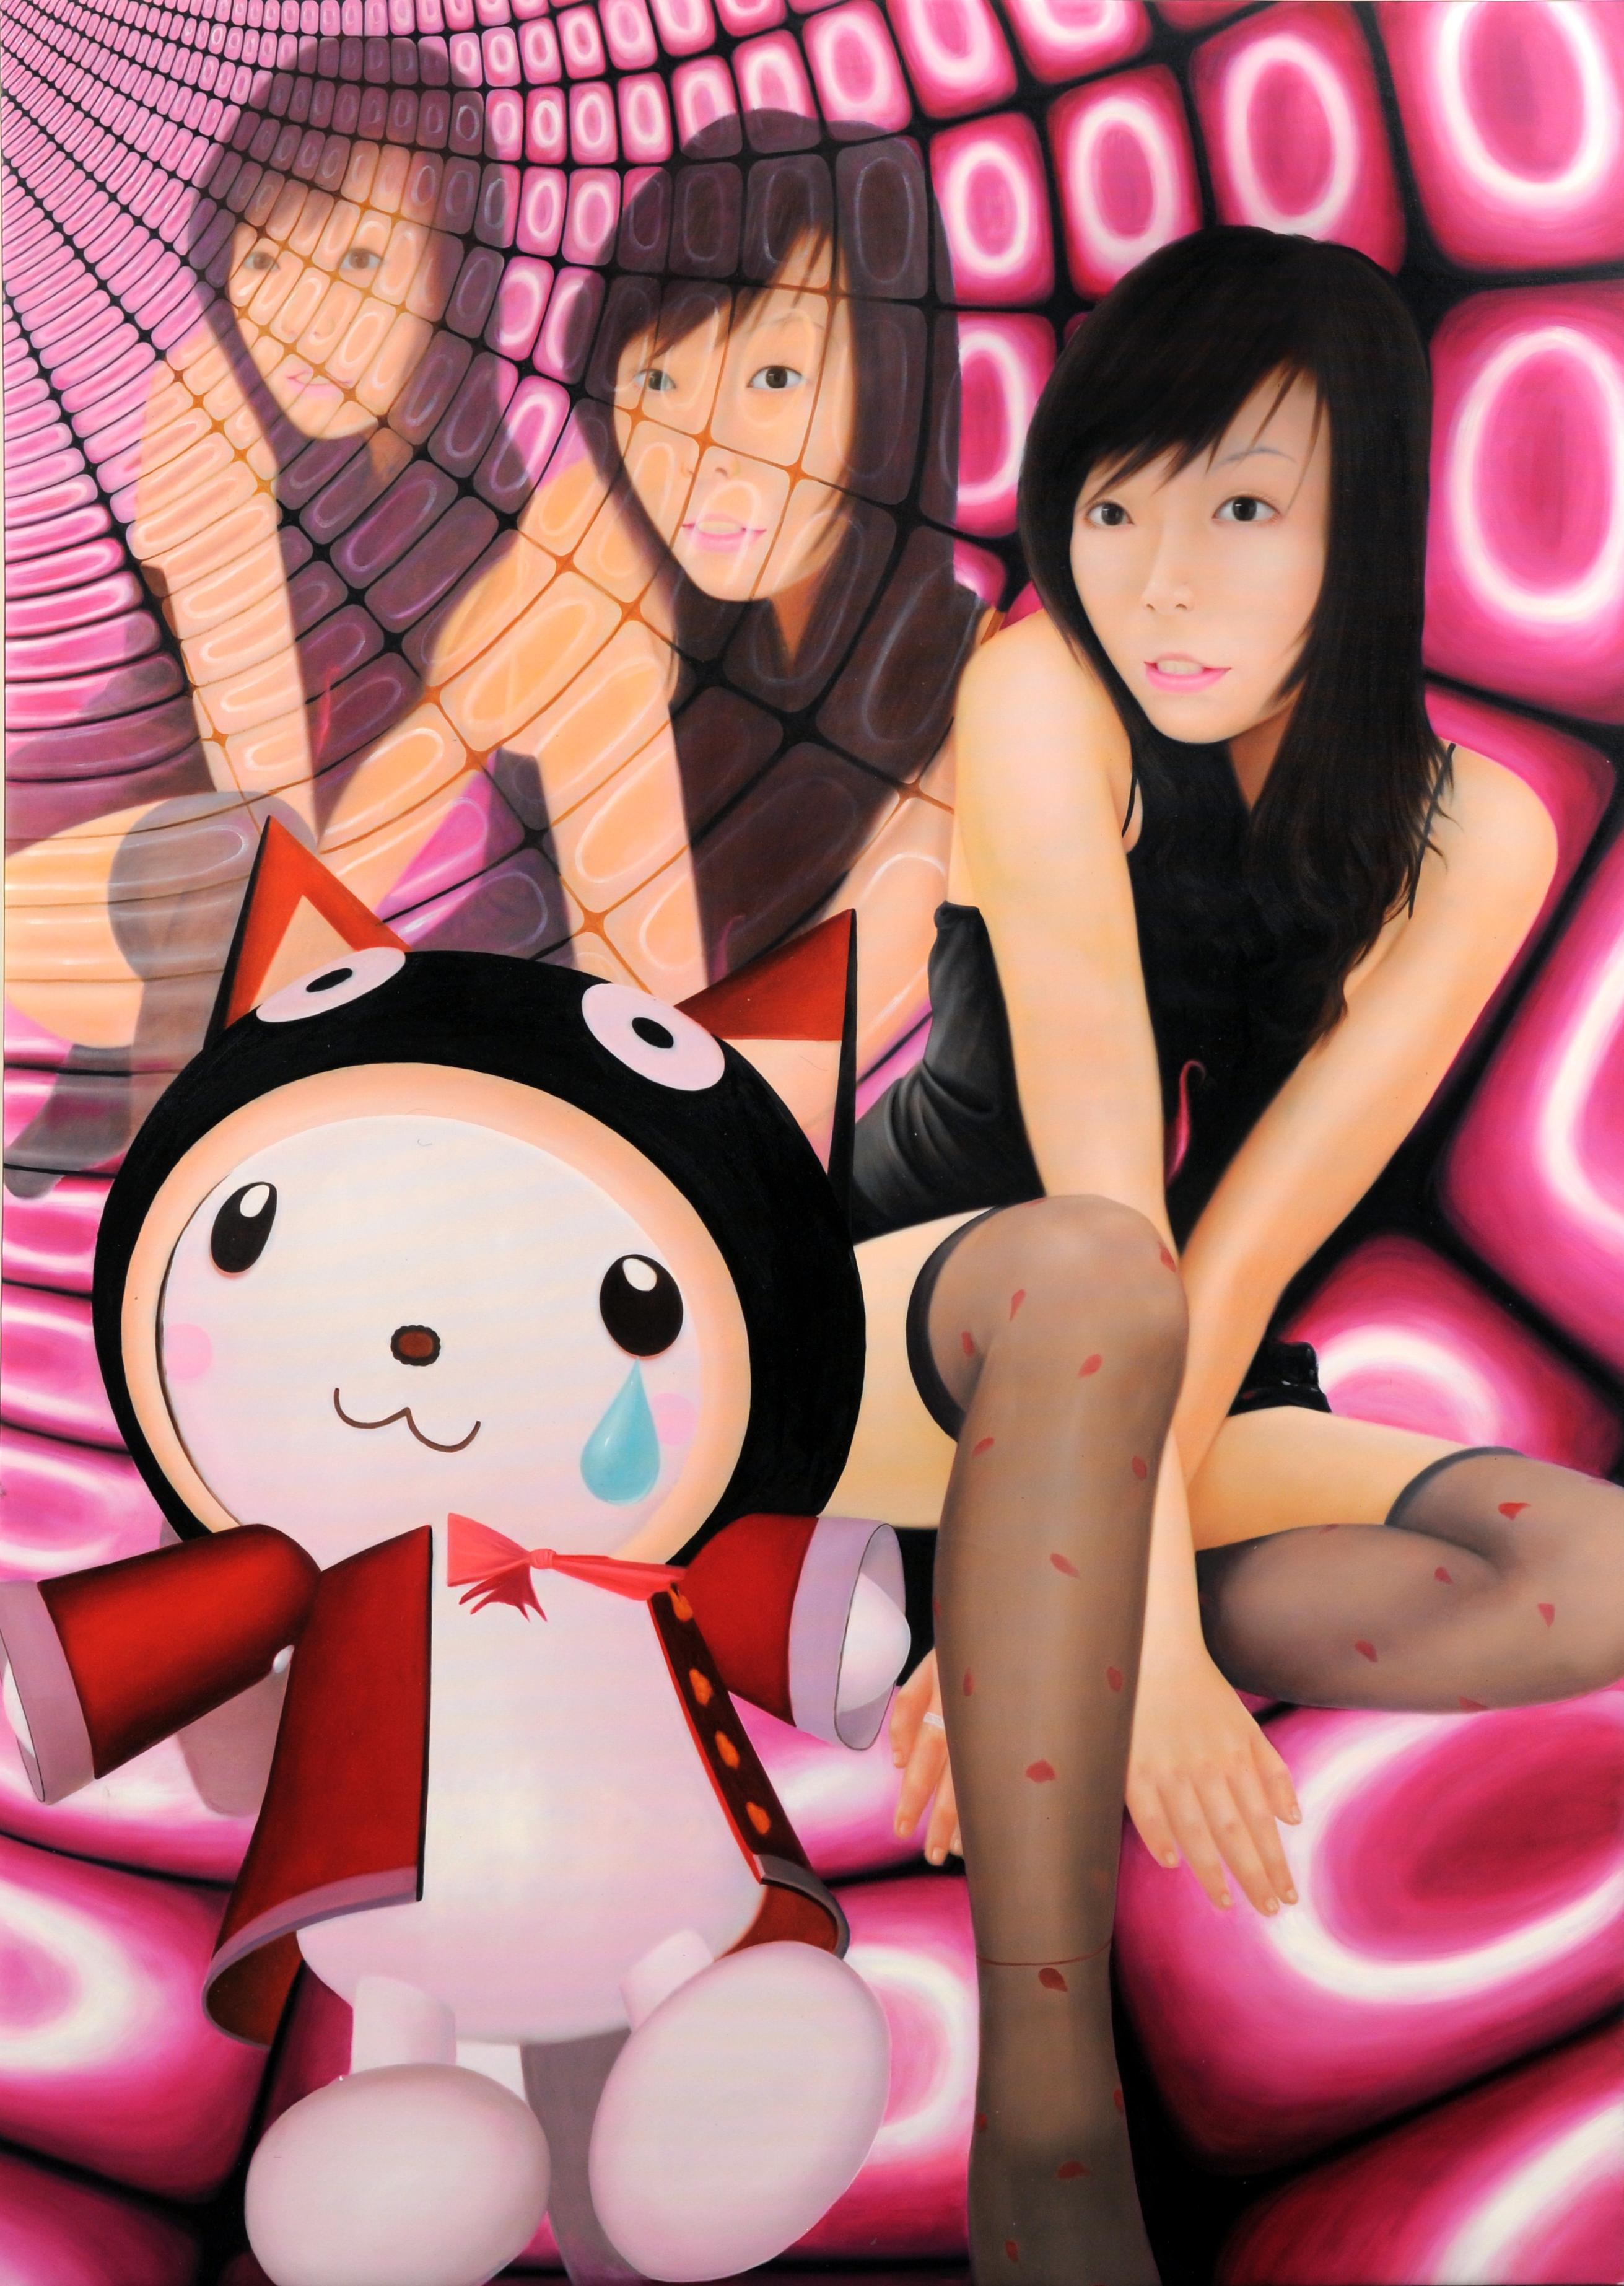 Tubes roses : Bonbons en coton et Lolita Spectrum éphémère - Painting de SAORI NAKAMISHI